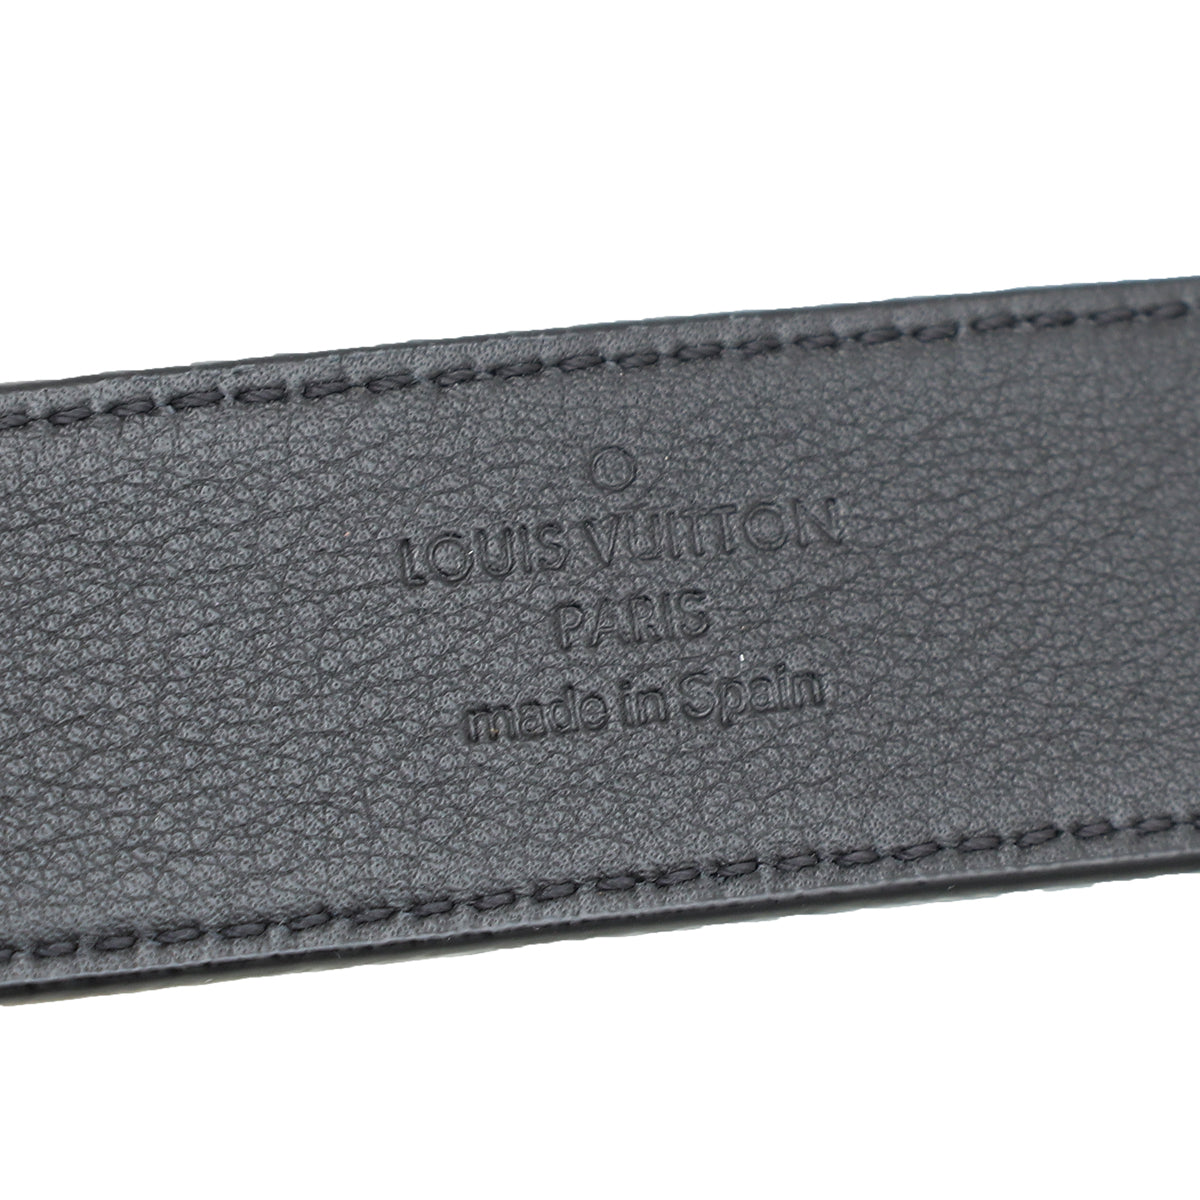 Louis Vuitton Black 30 mm Twist Belt 34